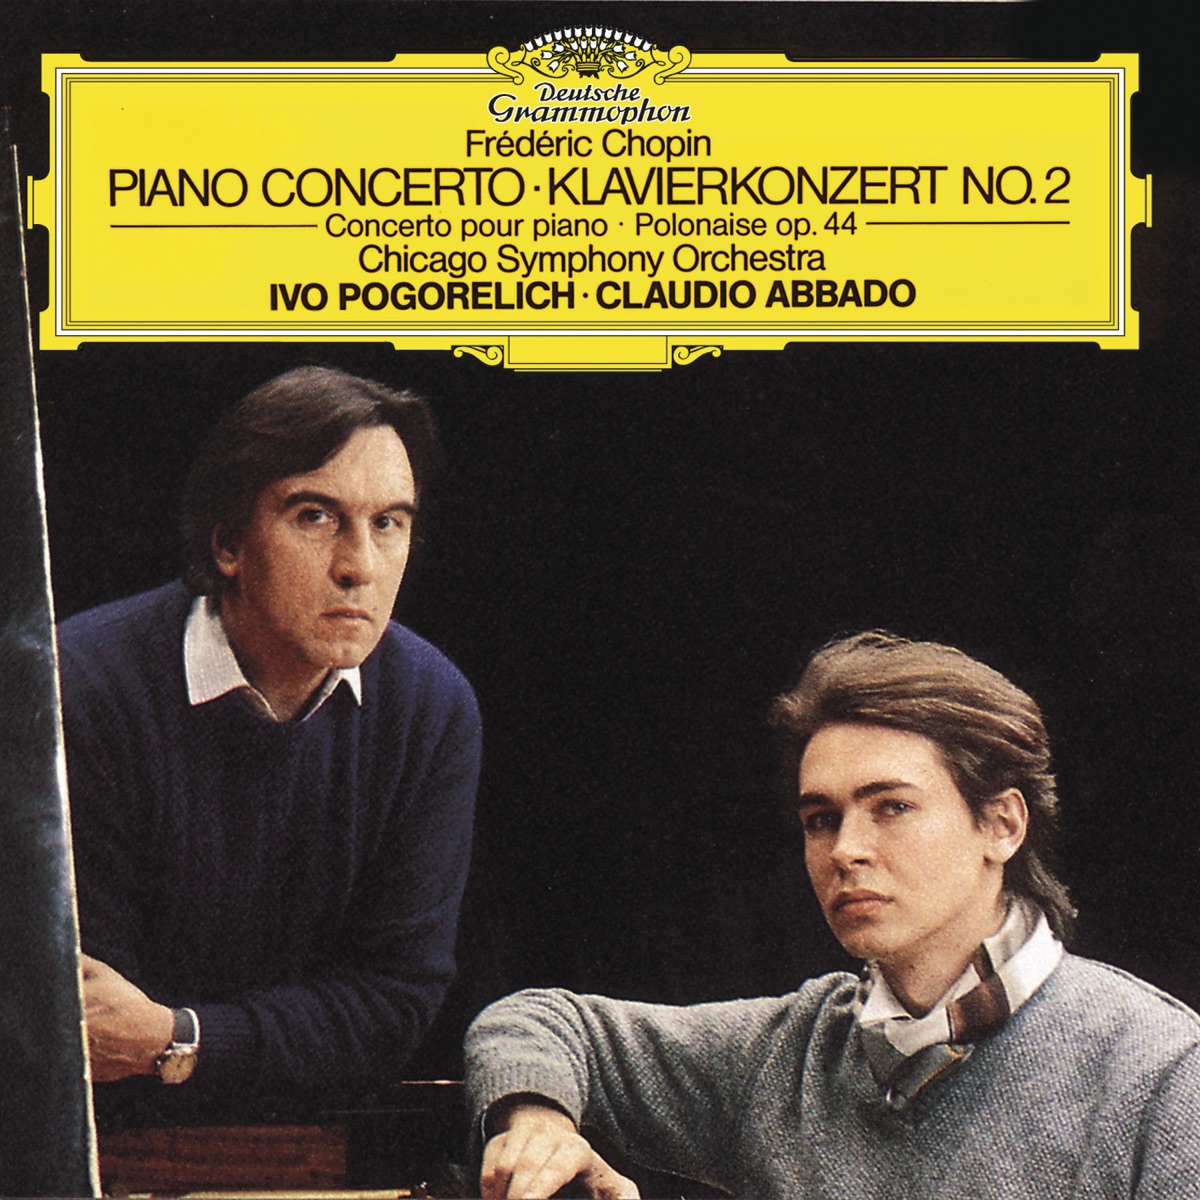 Chopin: Preludes, Op. 28 - Album by Ivo Pogorelich - Apple Music